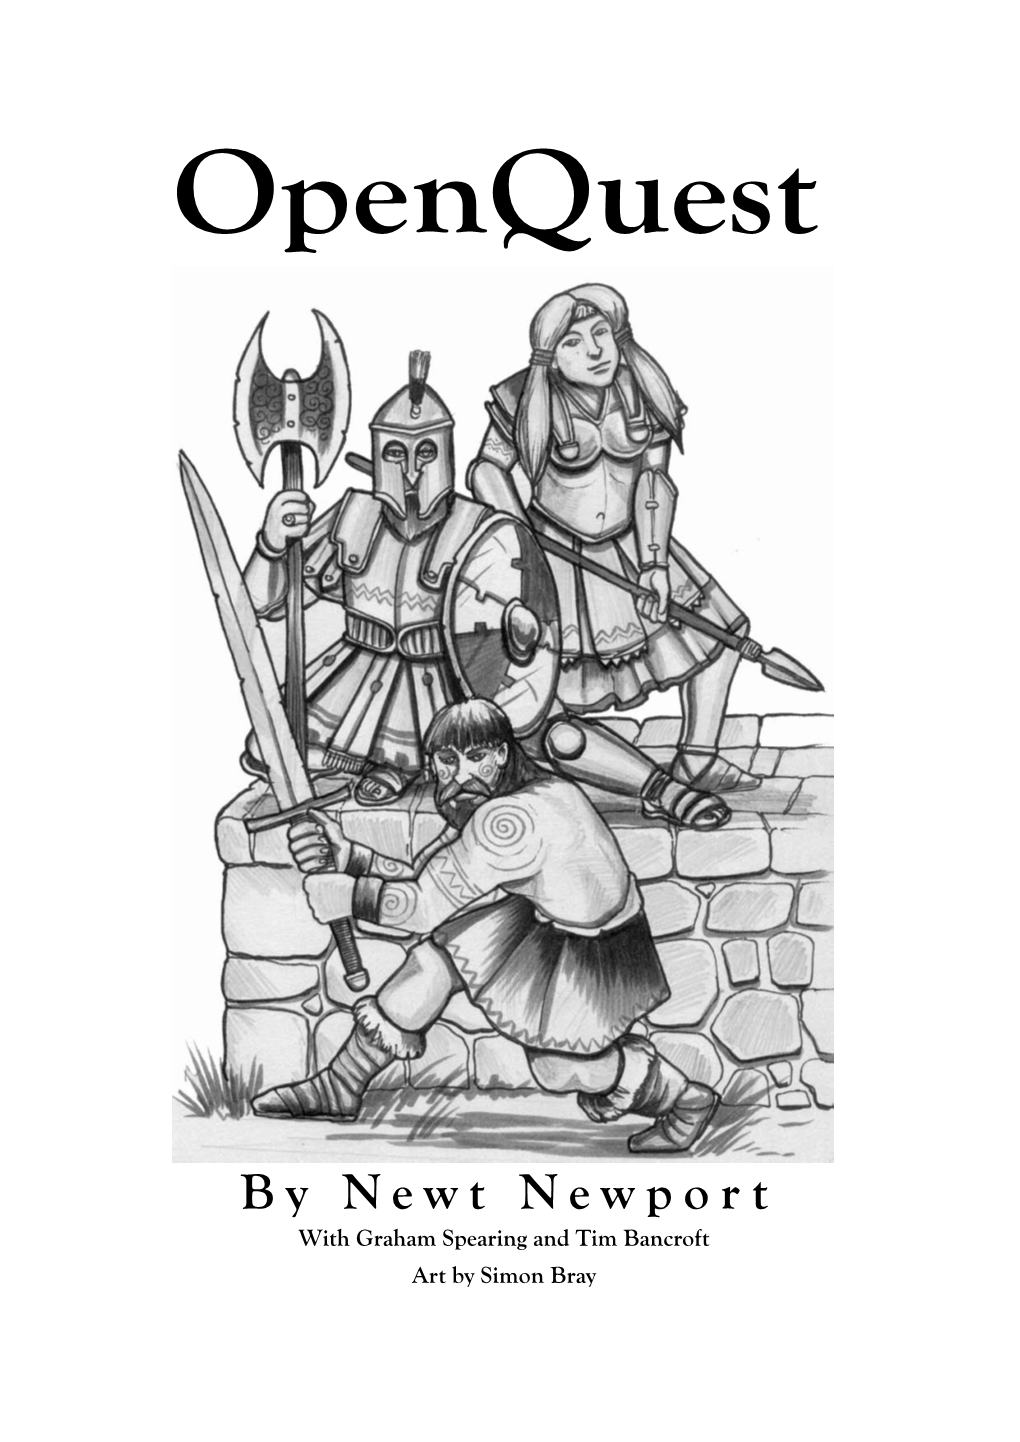 Free and OGL PDF of Openquest